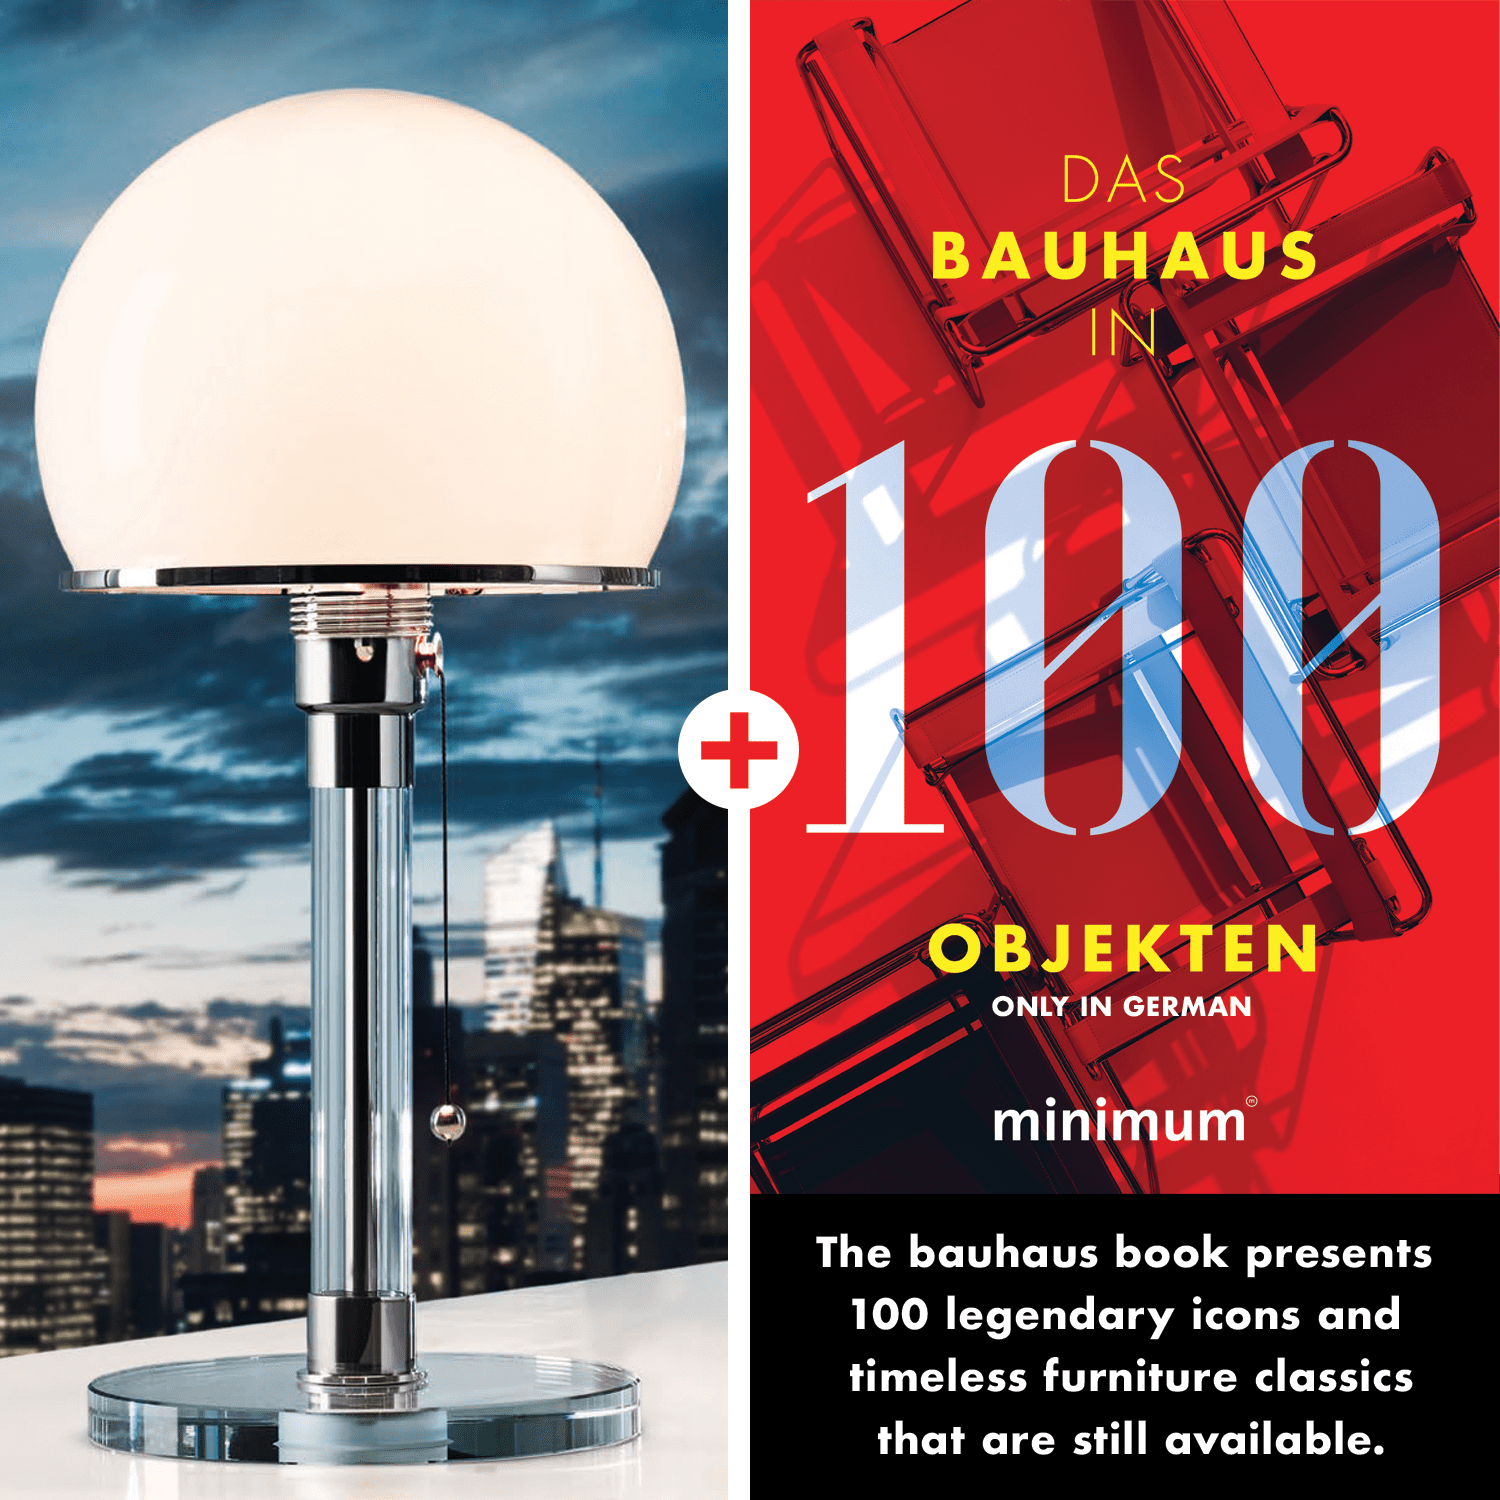 Immagine di Lampada Wagenfeld WG 24 + Bauhaus in 100 oggetti